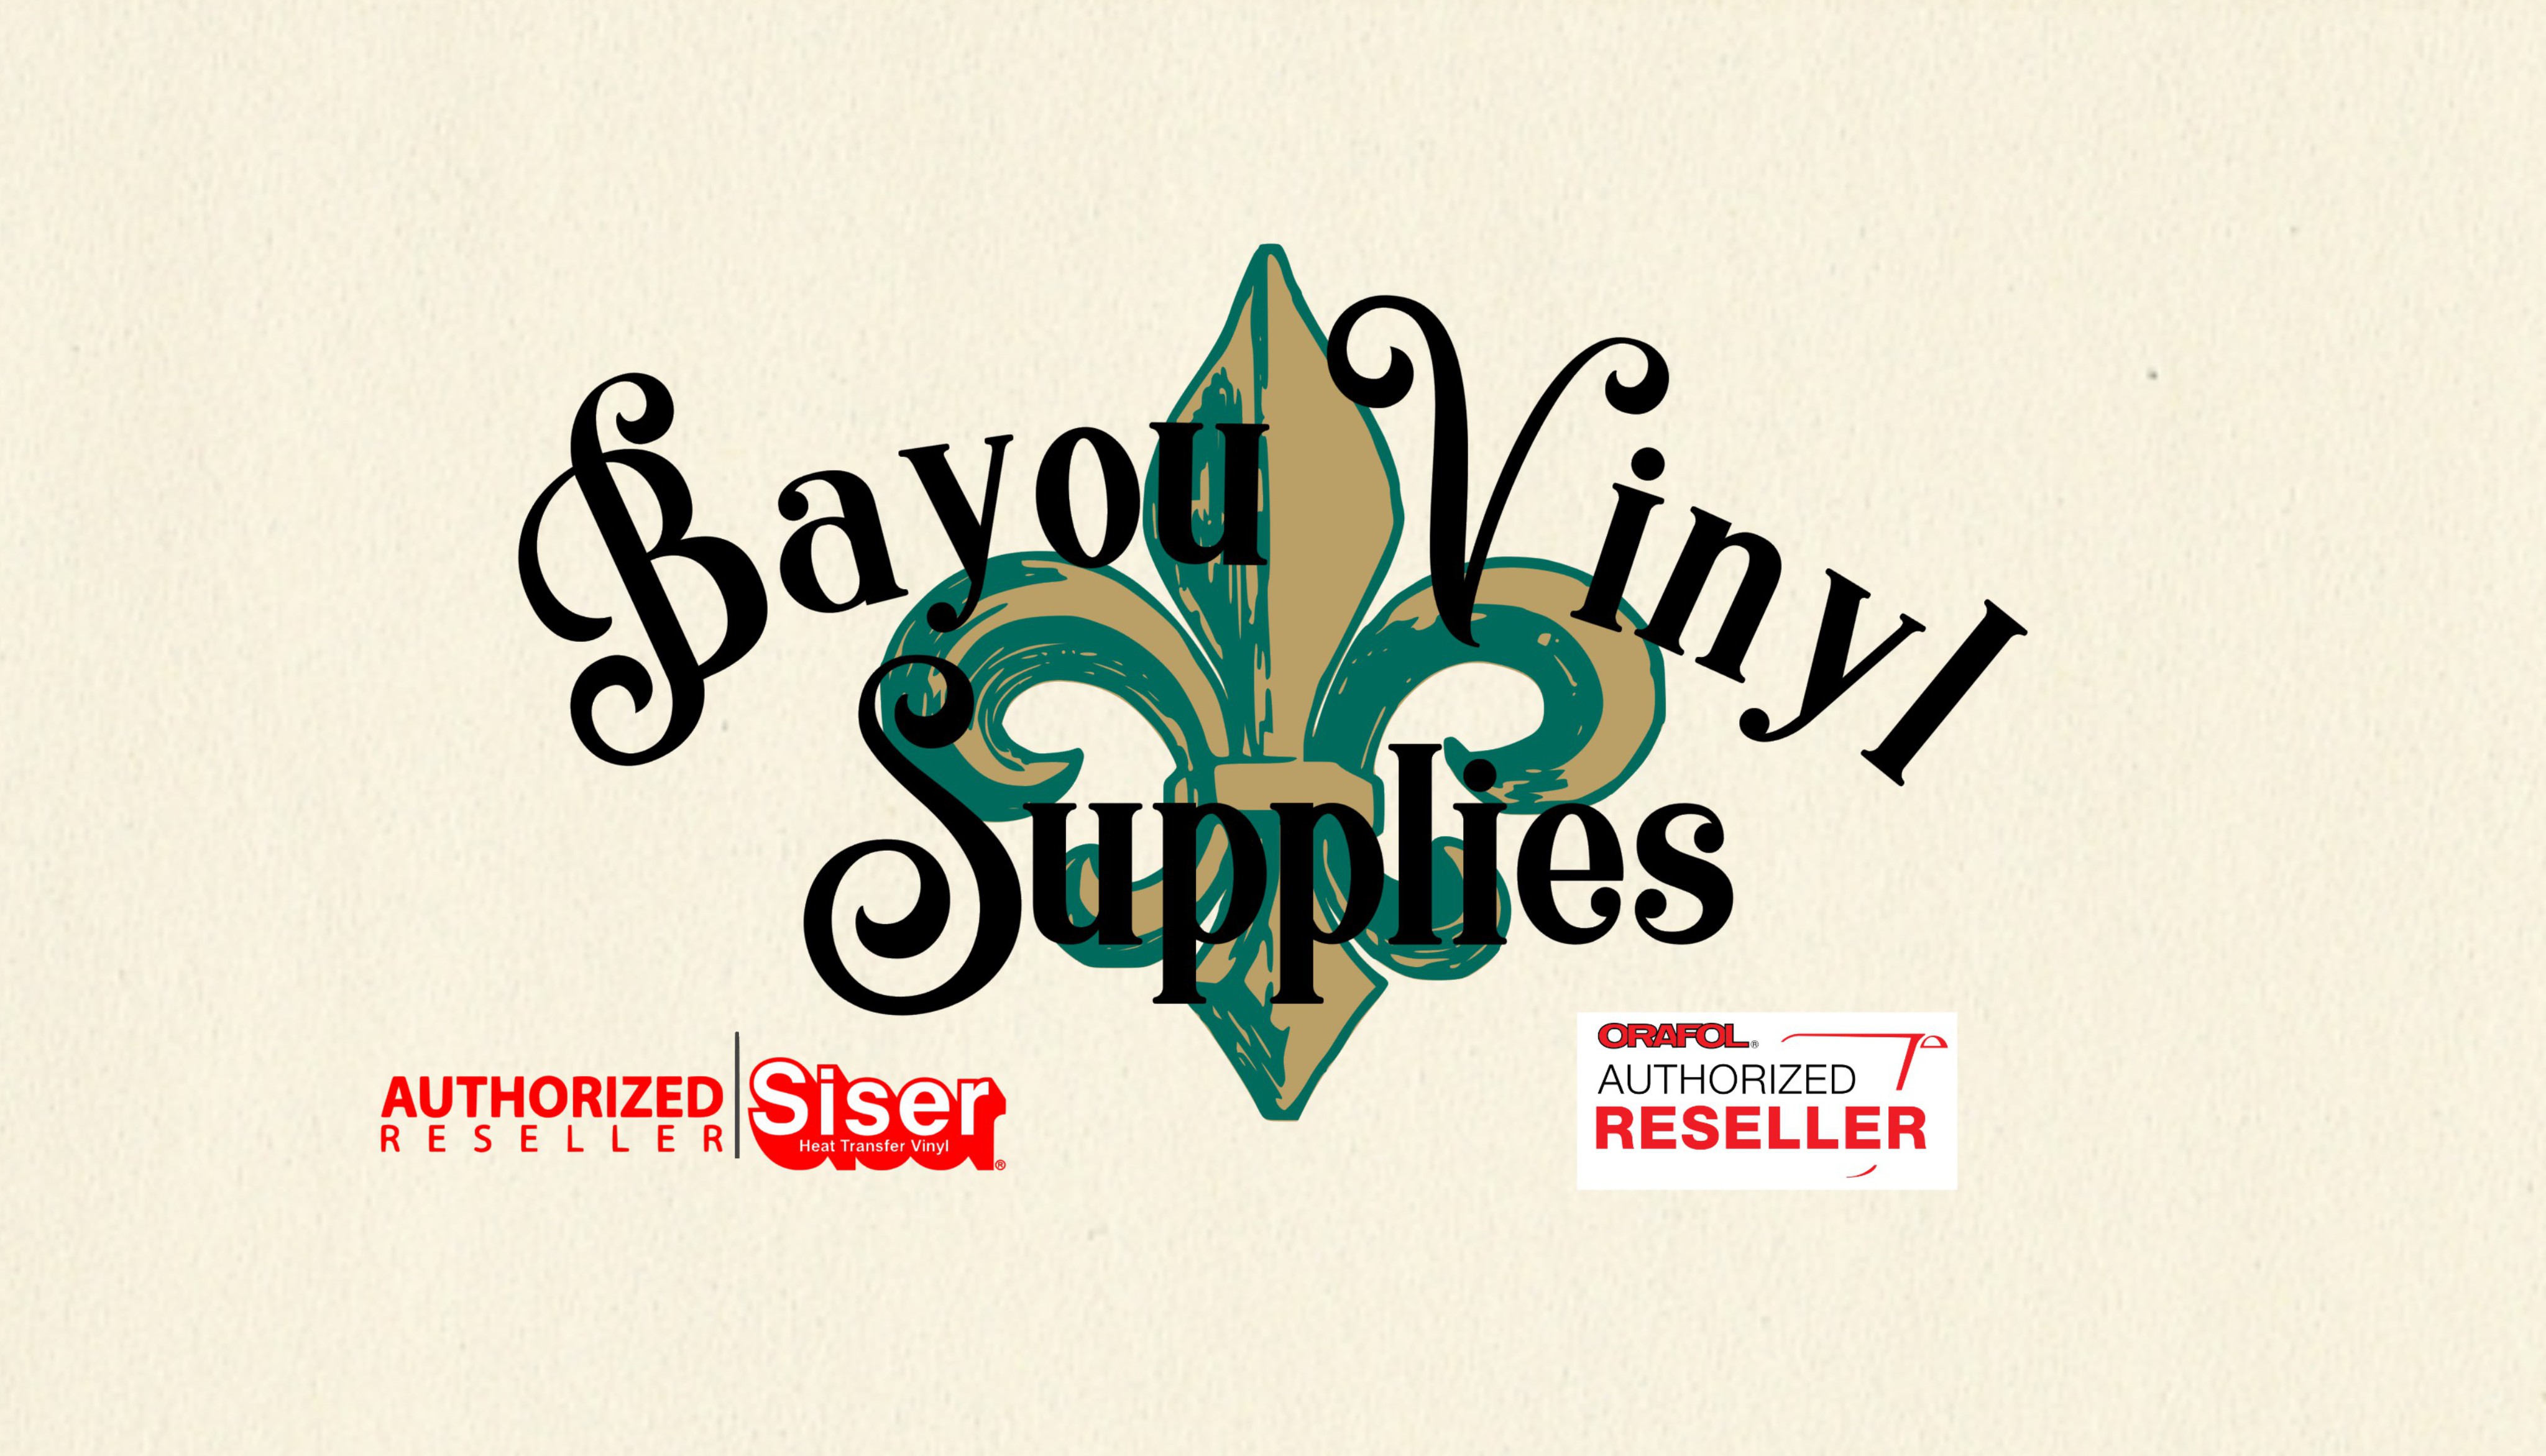 Bayou Vinyl Supplies